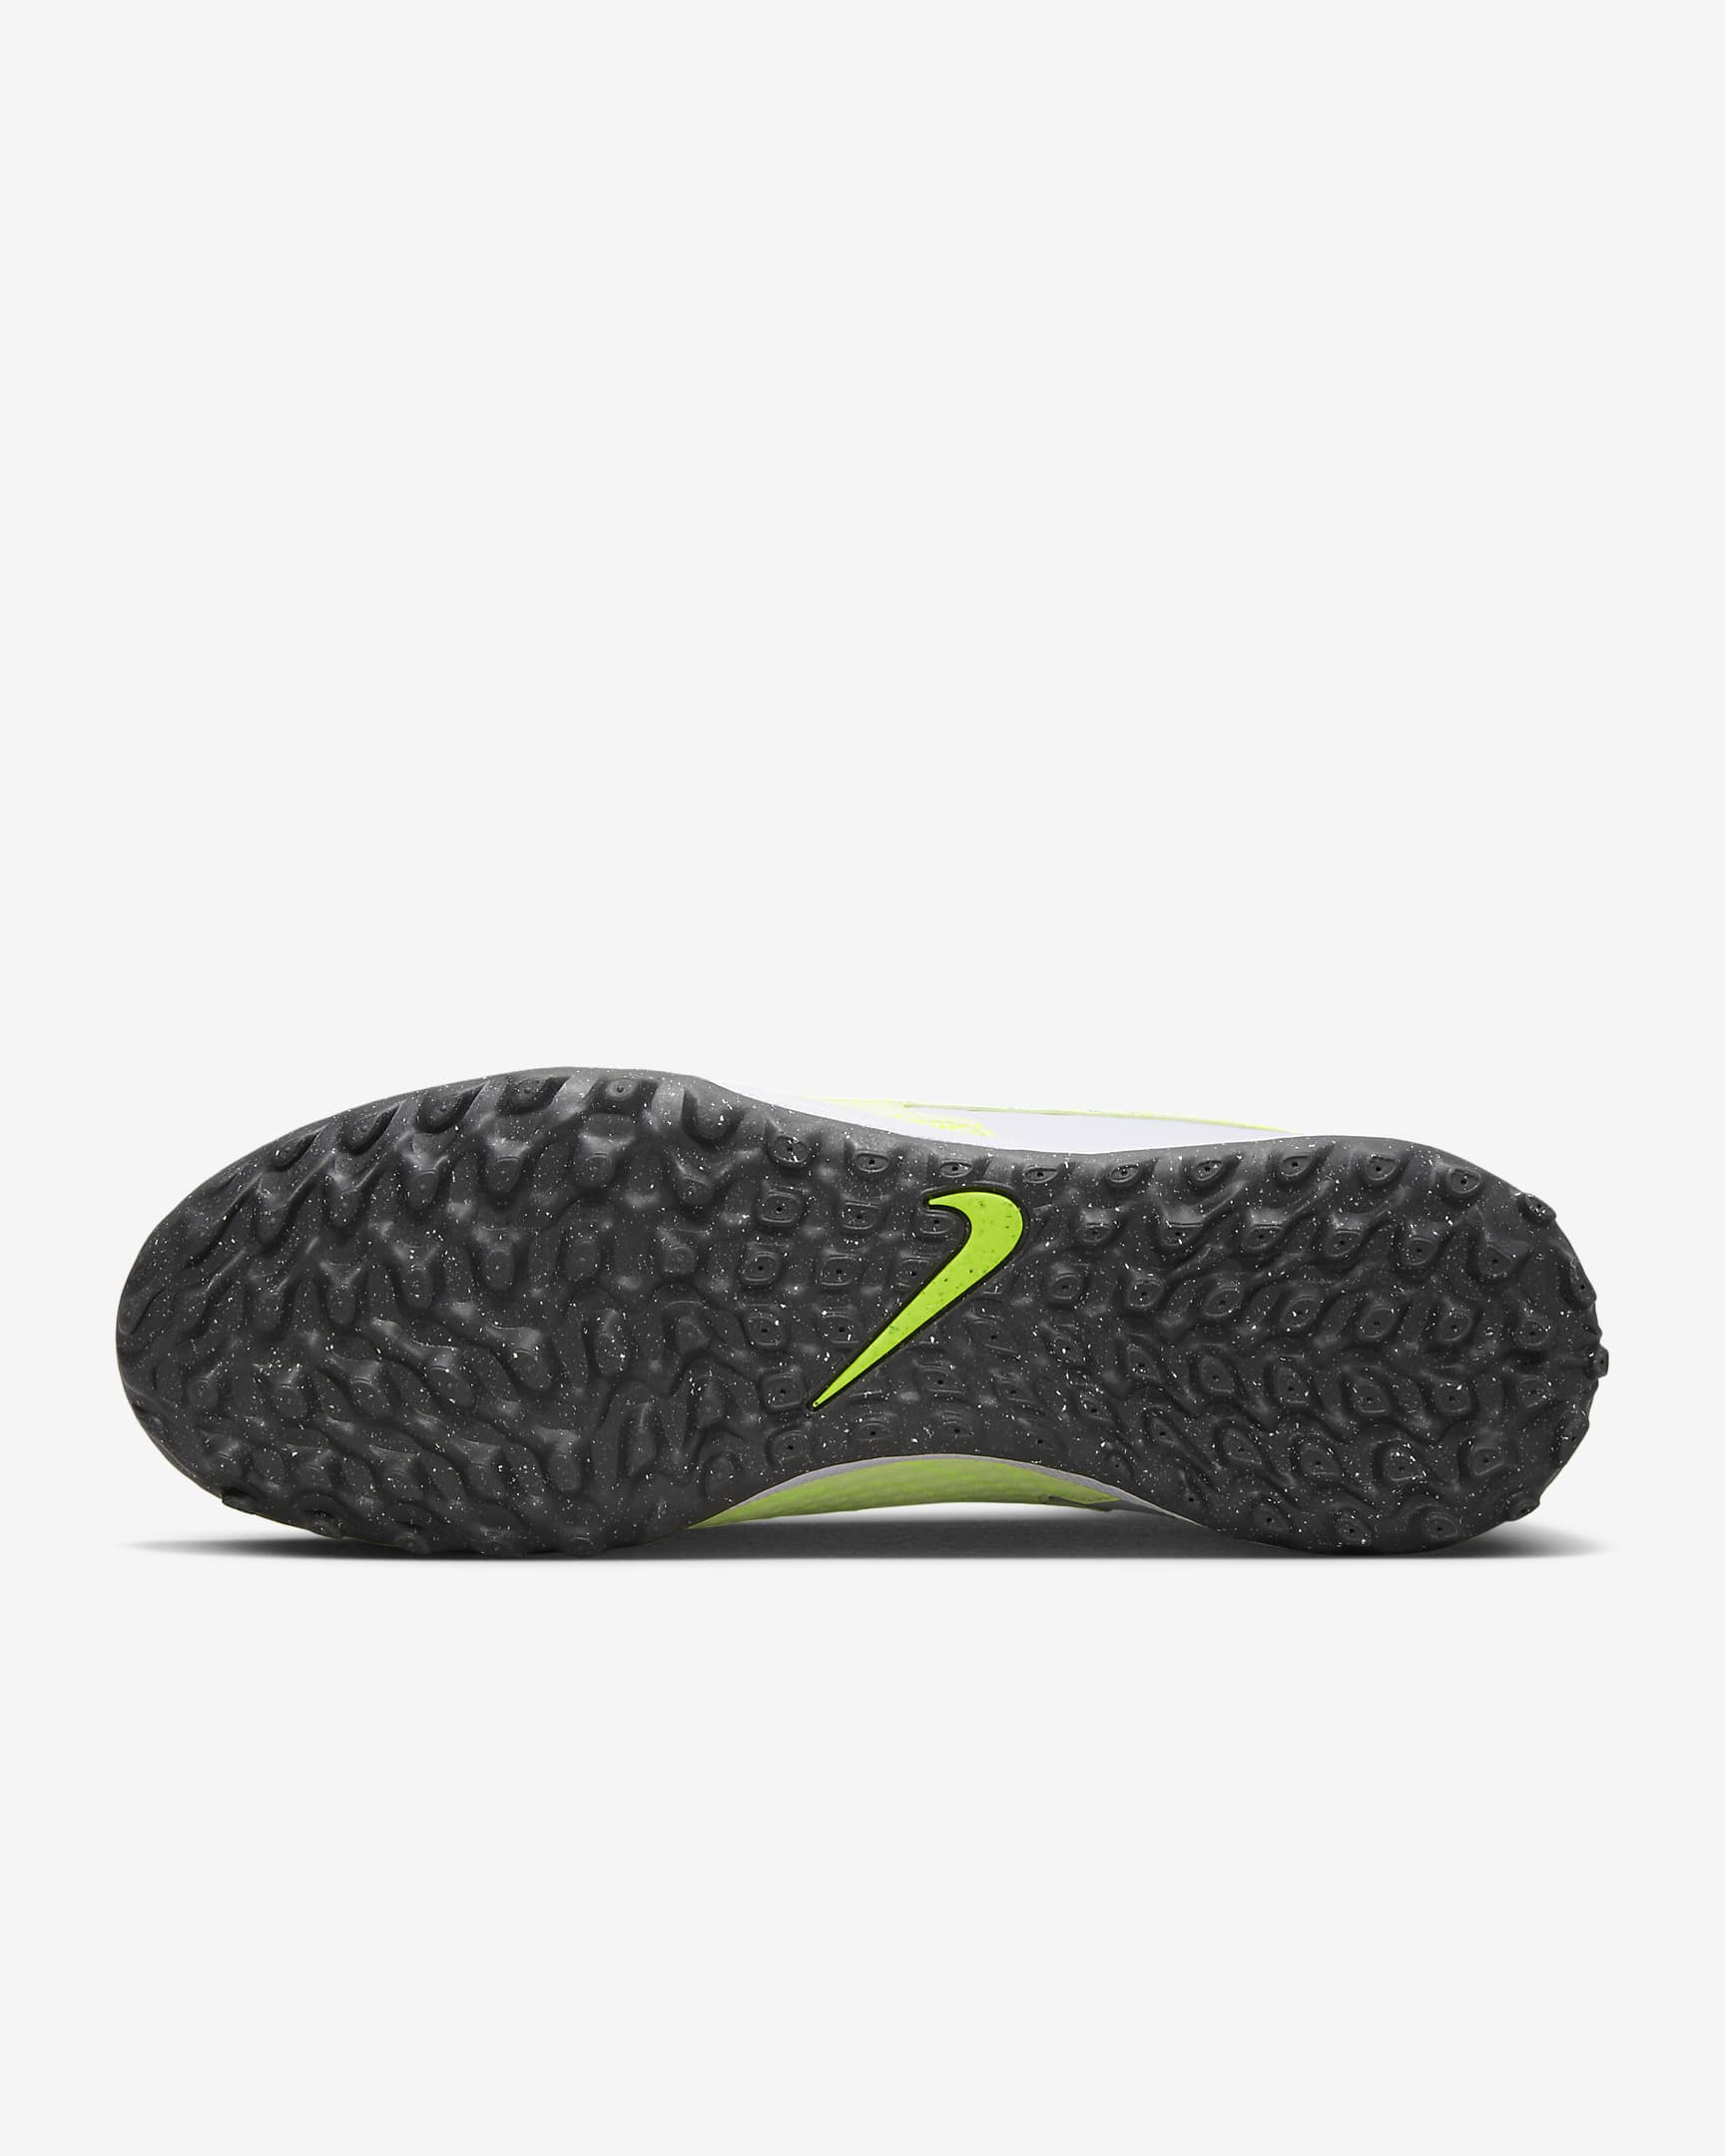 Calzado de fútbol para pasto sintético (turf) Nike Academy TF.